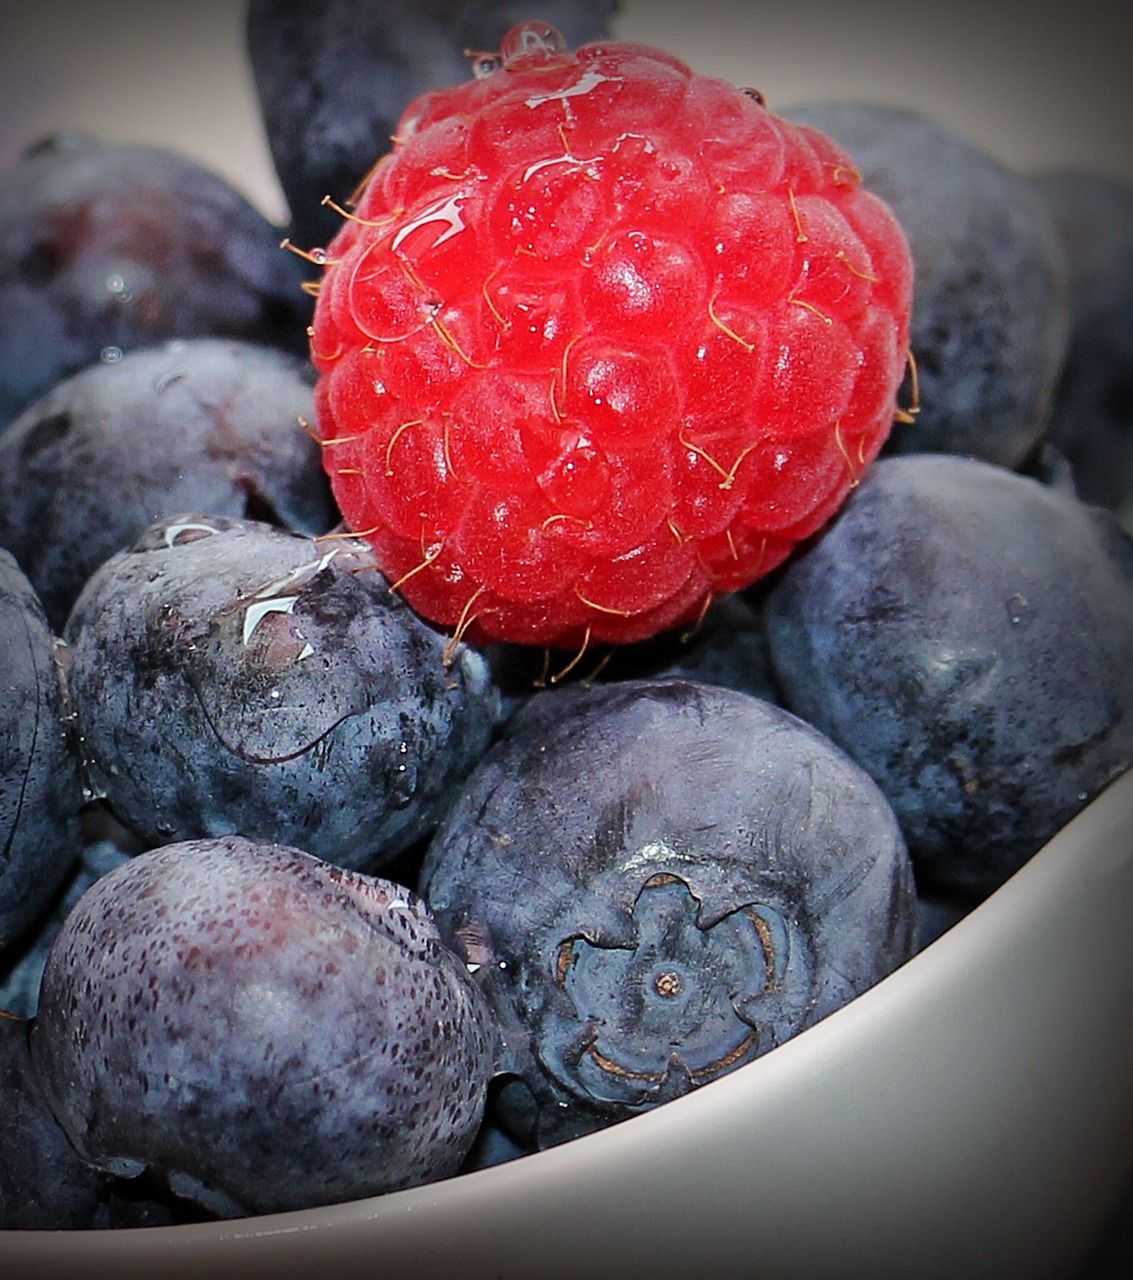 blueberries raspberry fruits free photo